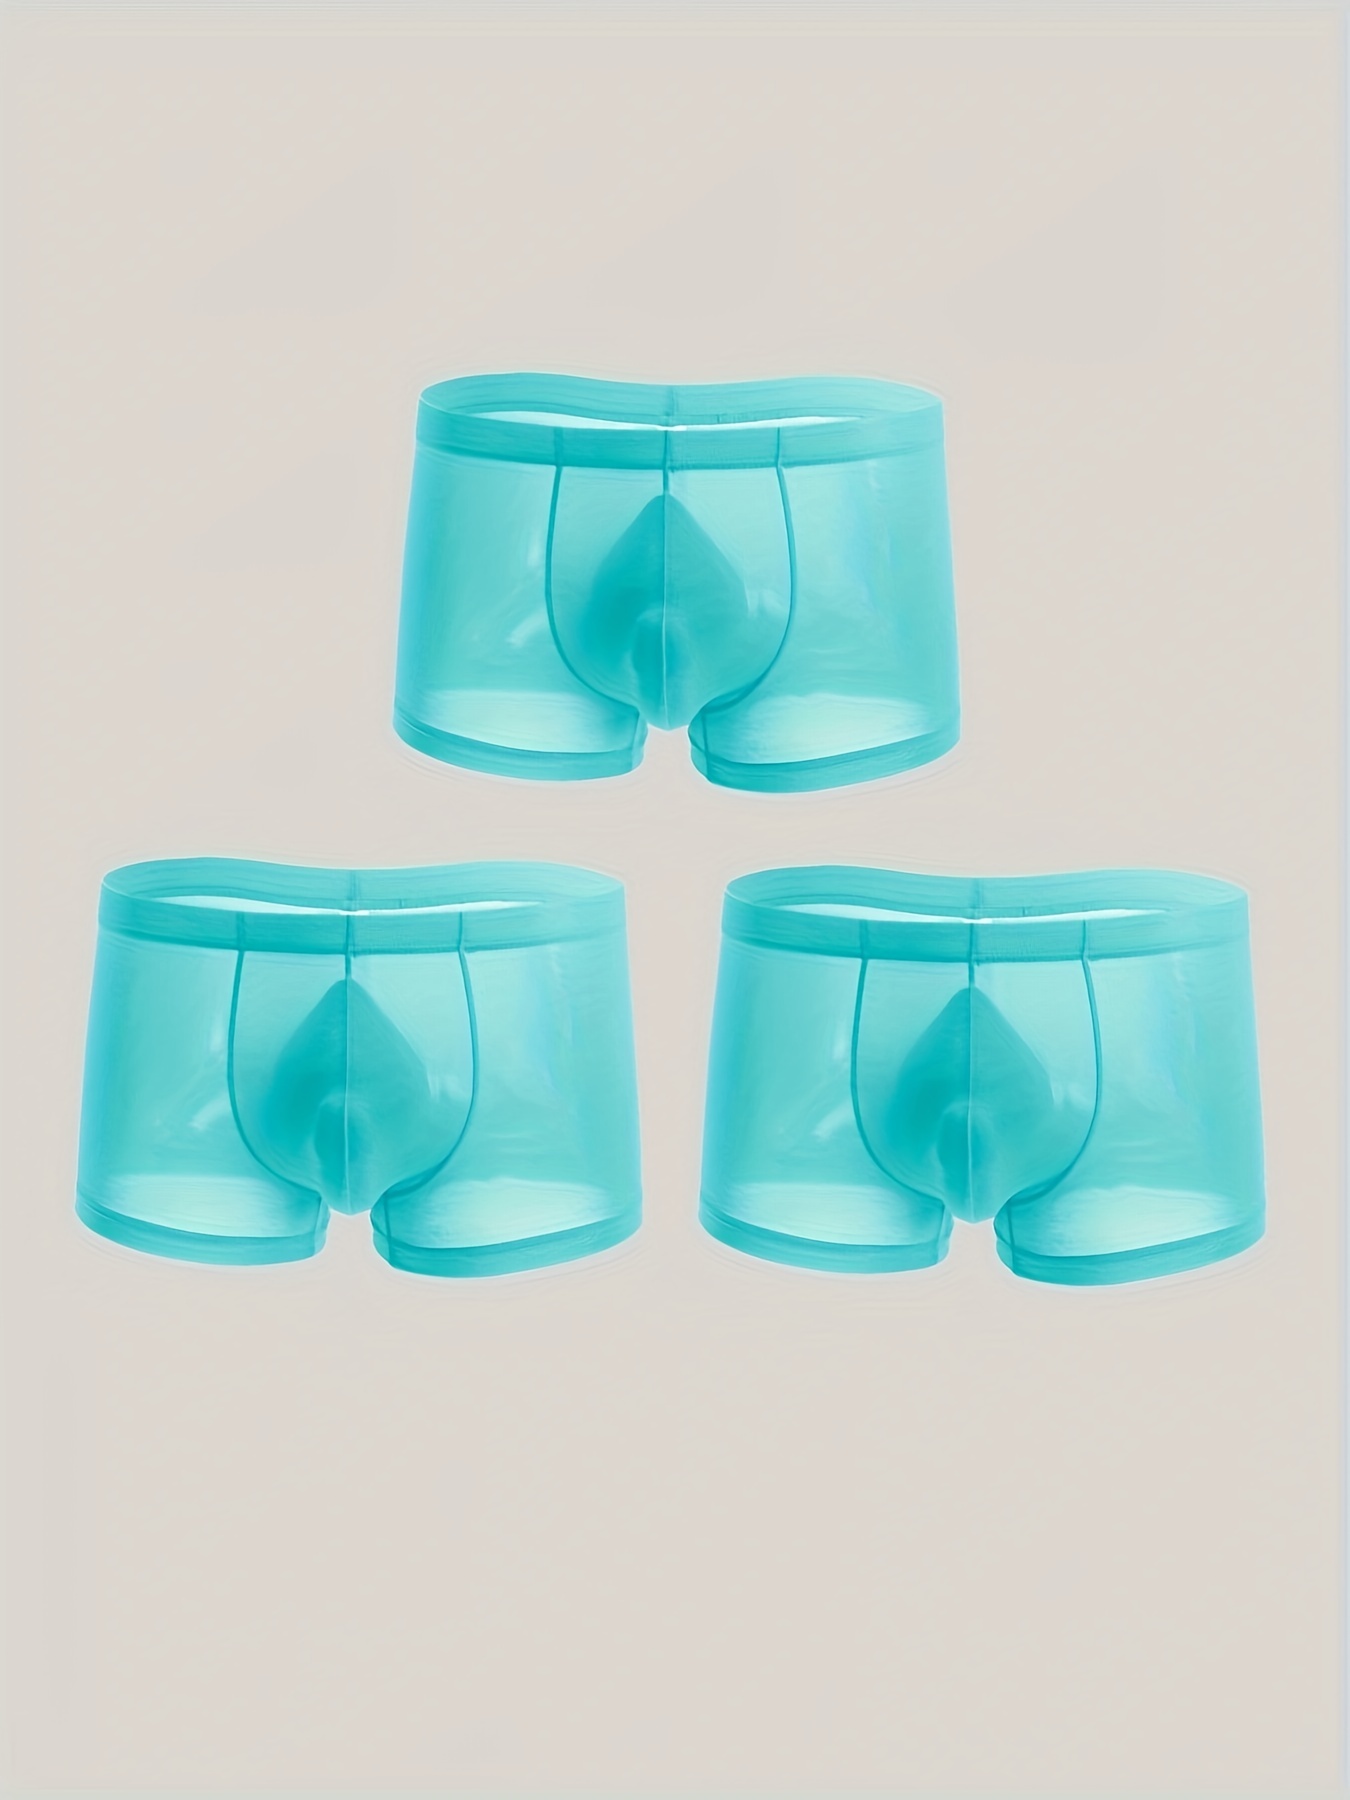 Shop Seamless Ladies Panties Ice Silk, 6 Pieces, Multicolor